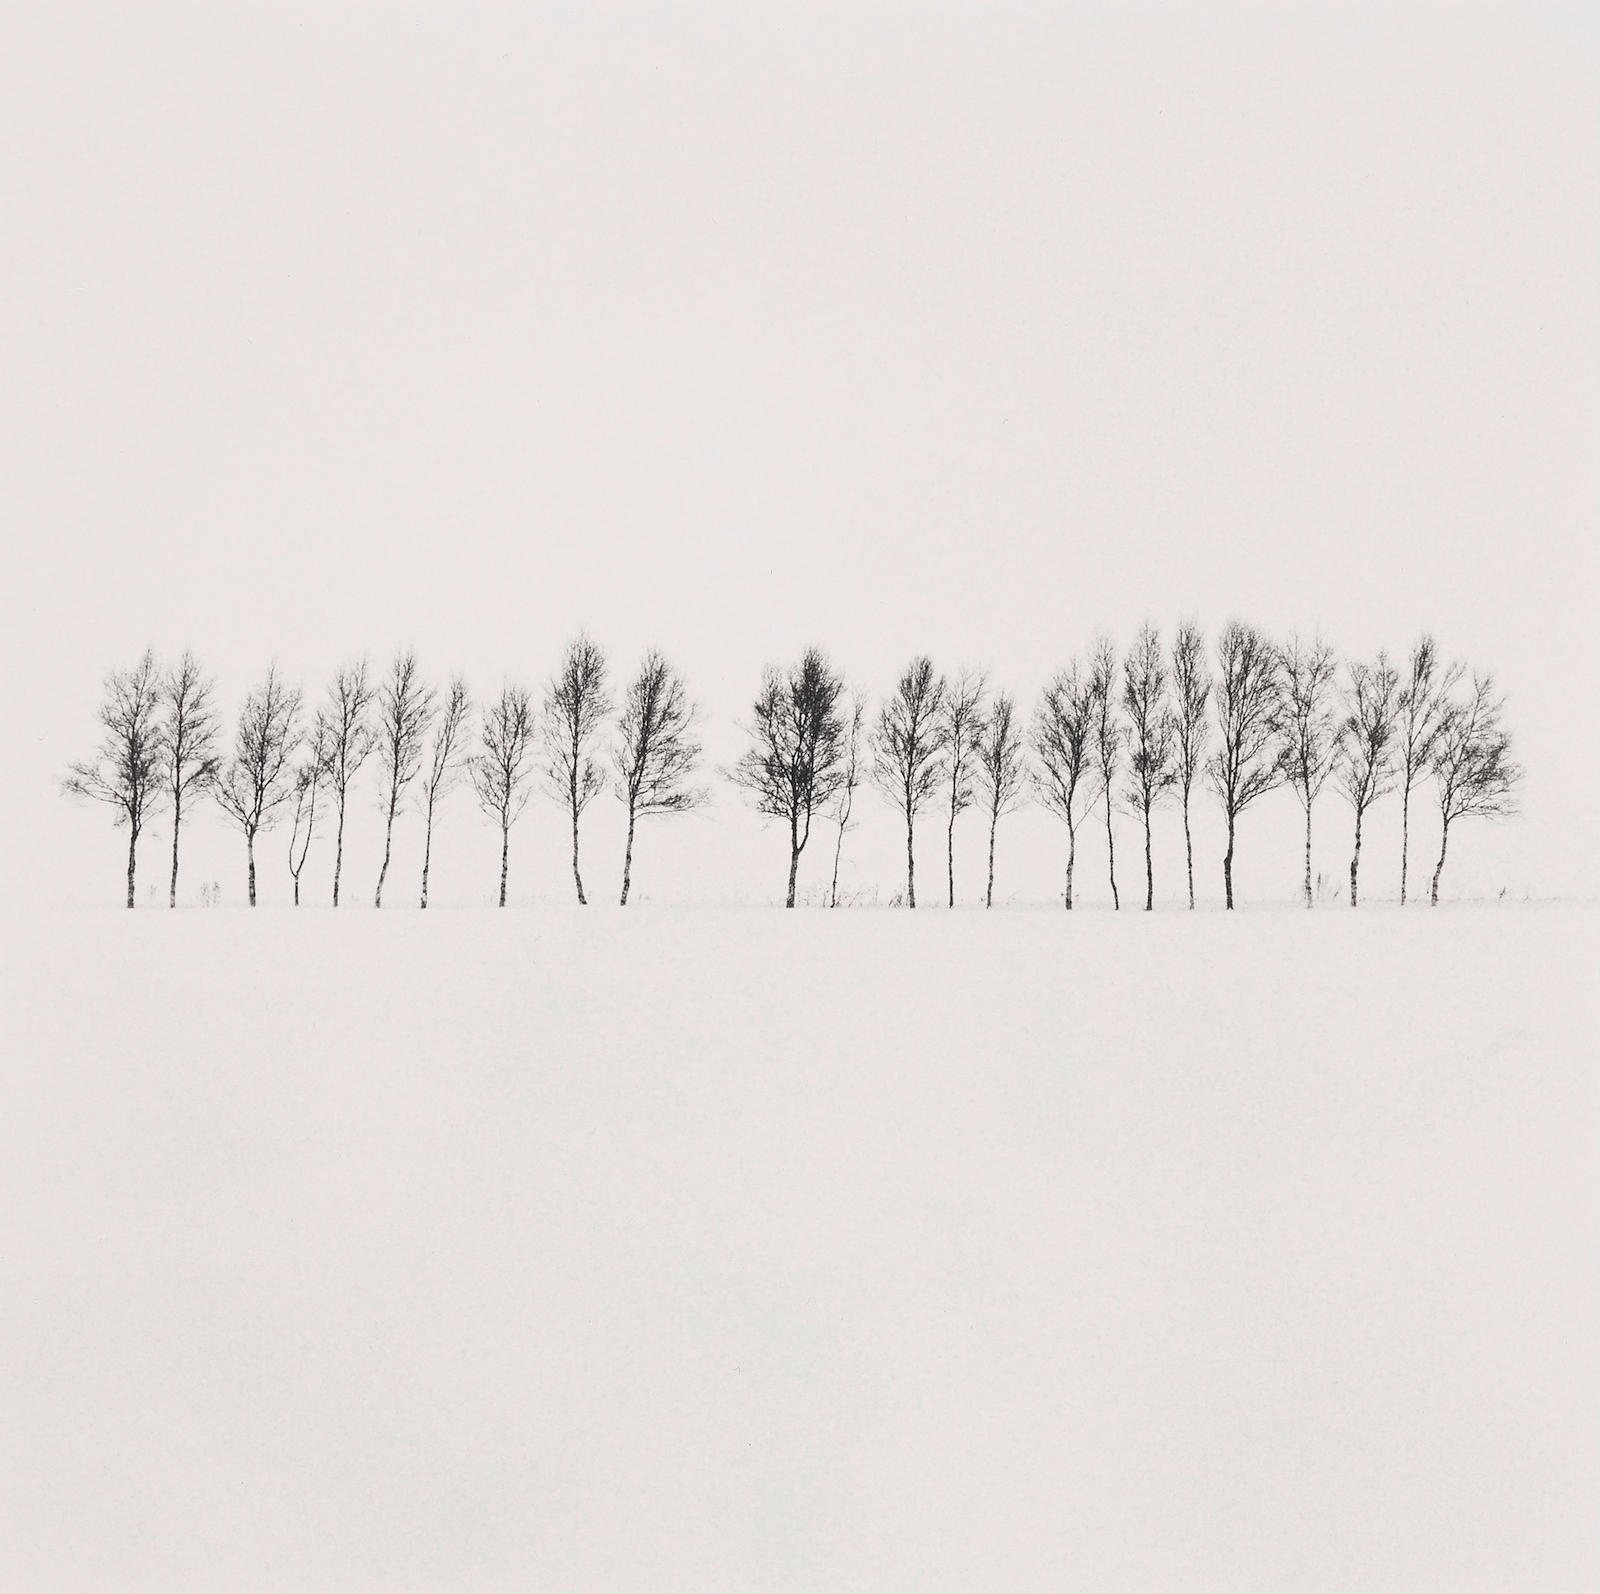 Michael Kenna | Twenty-four Trees, Abashiri, Hokkaido, Japan (2005